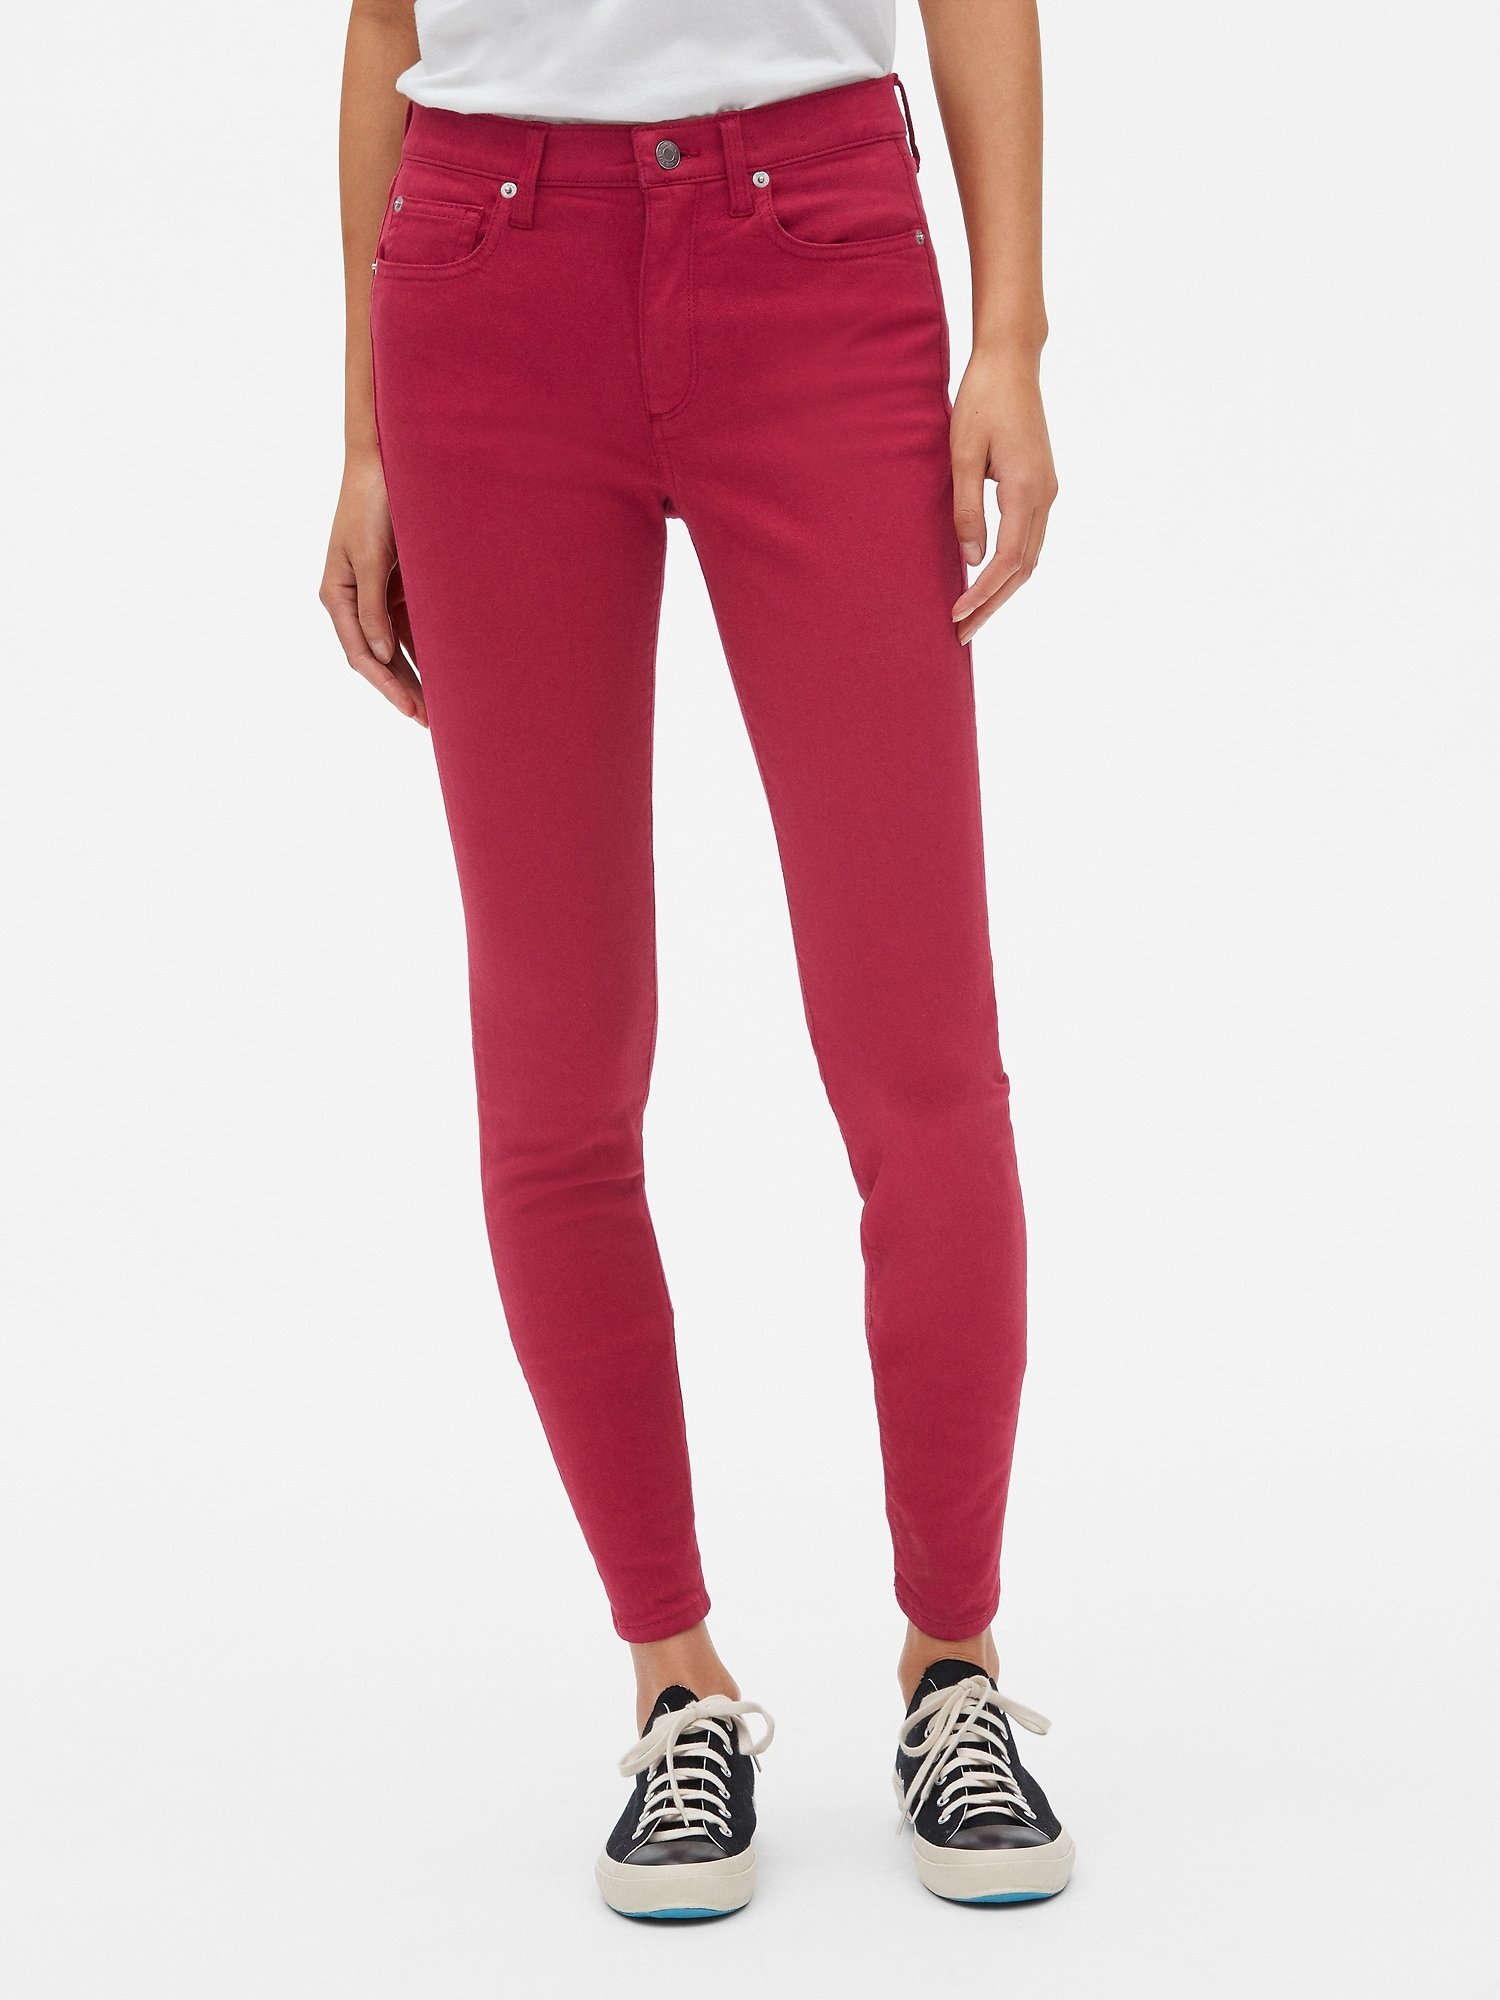 Orta Belli True Skinny Jean Pantolon product image